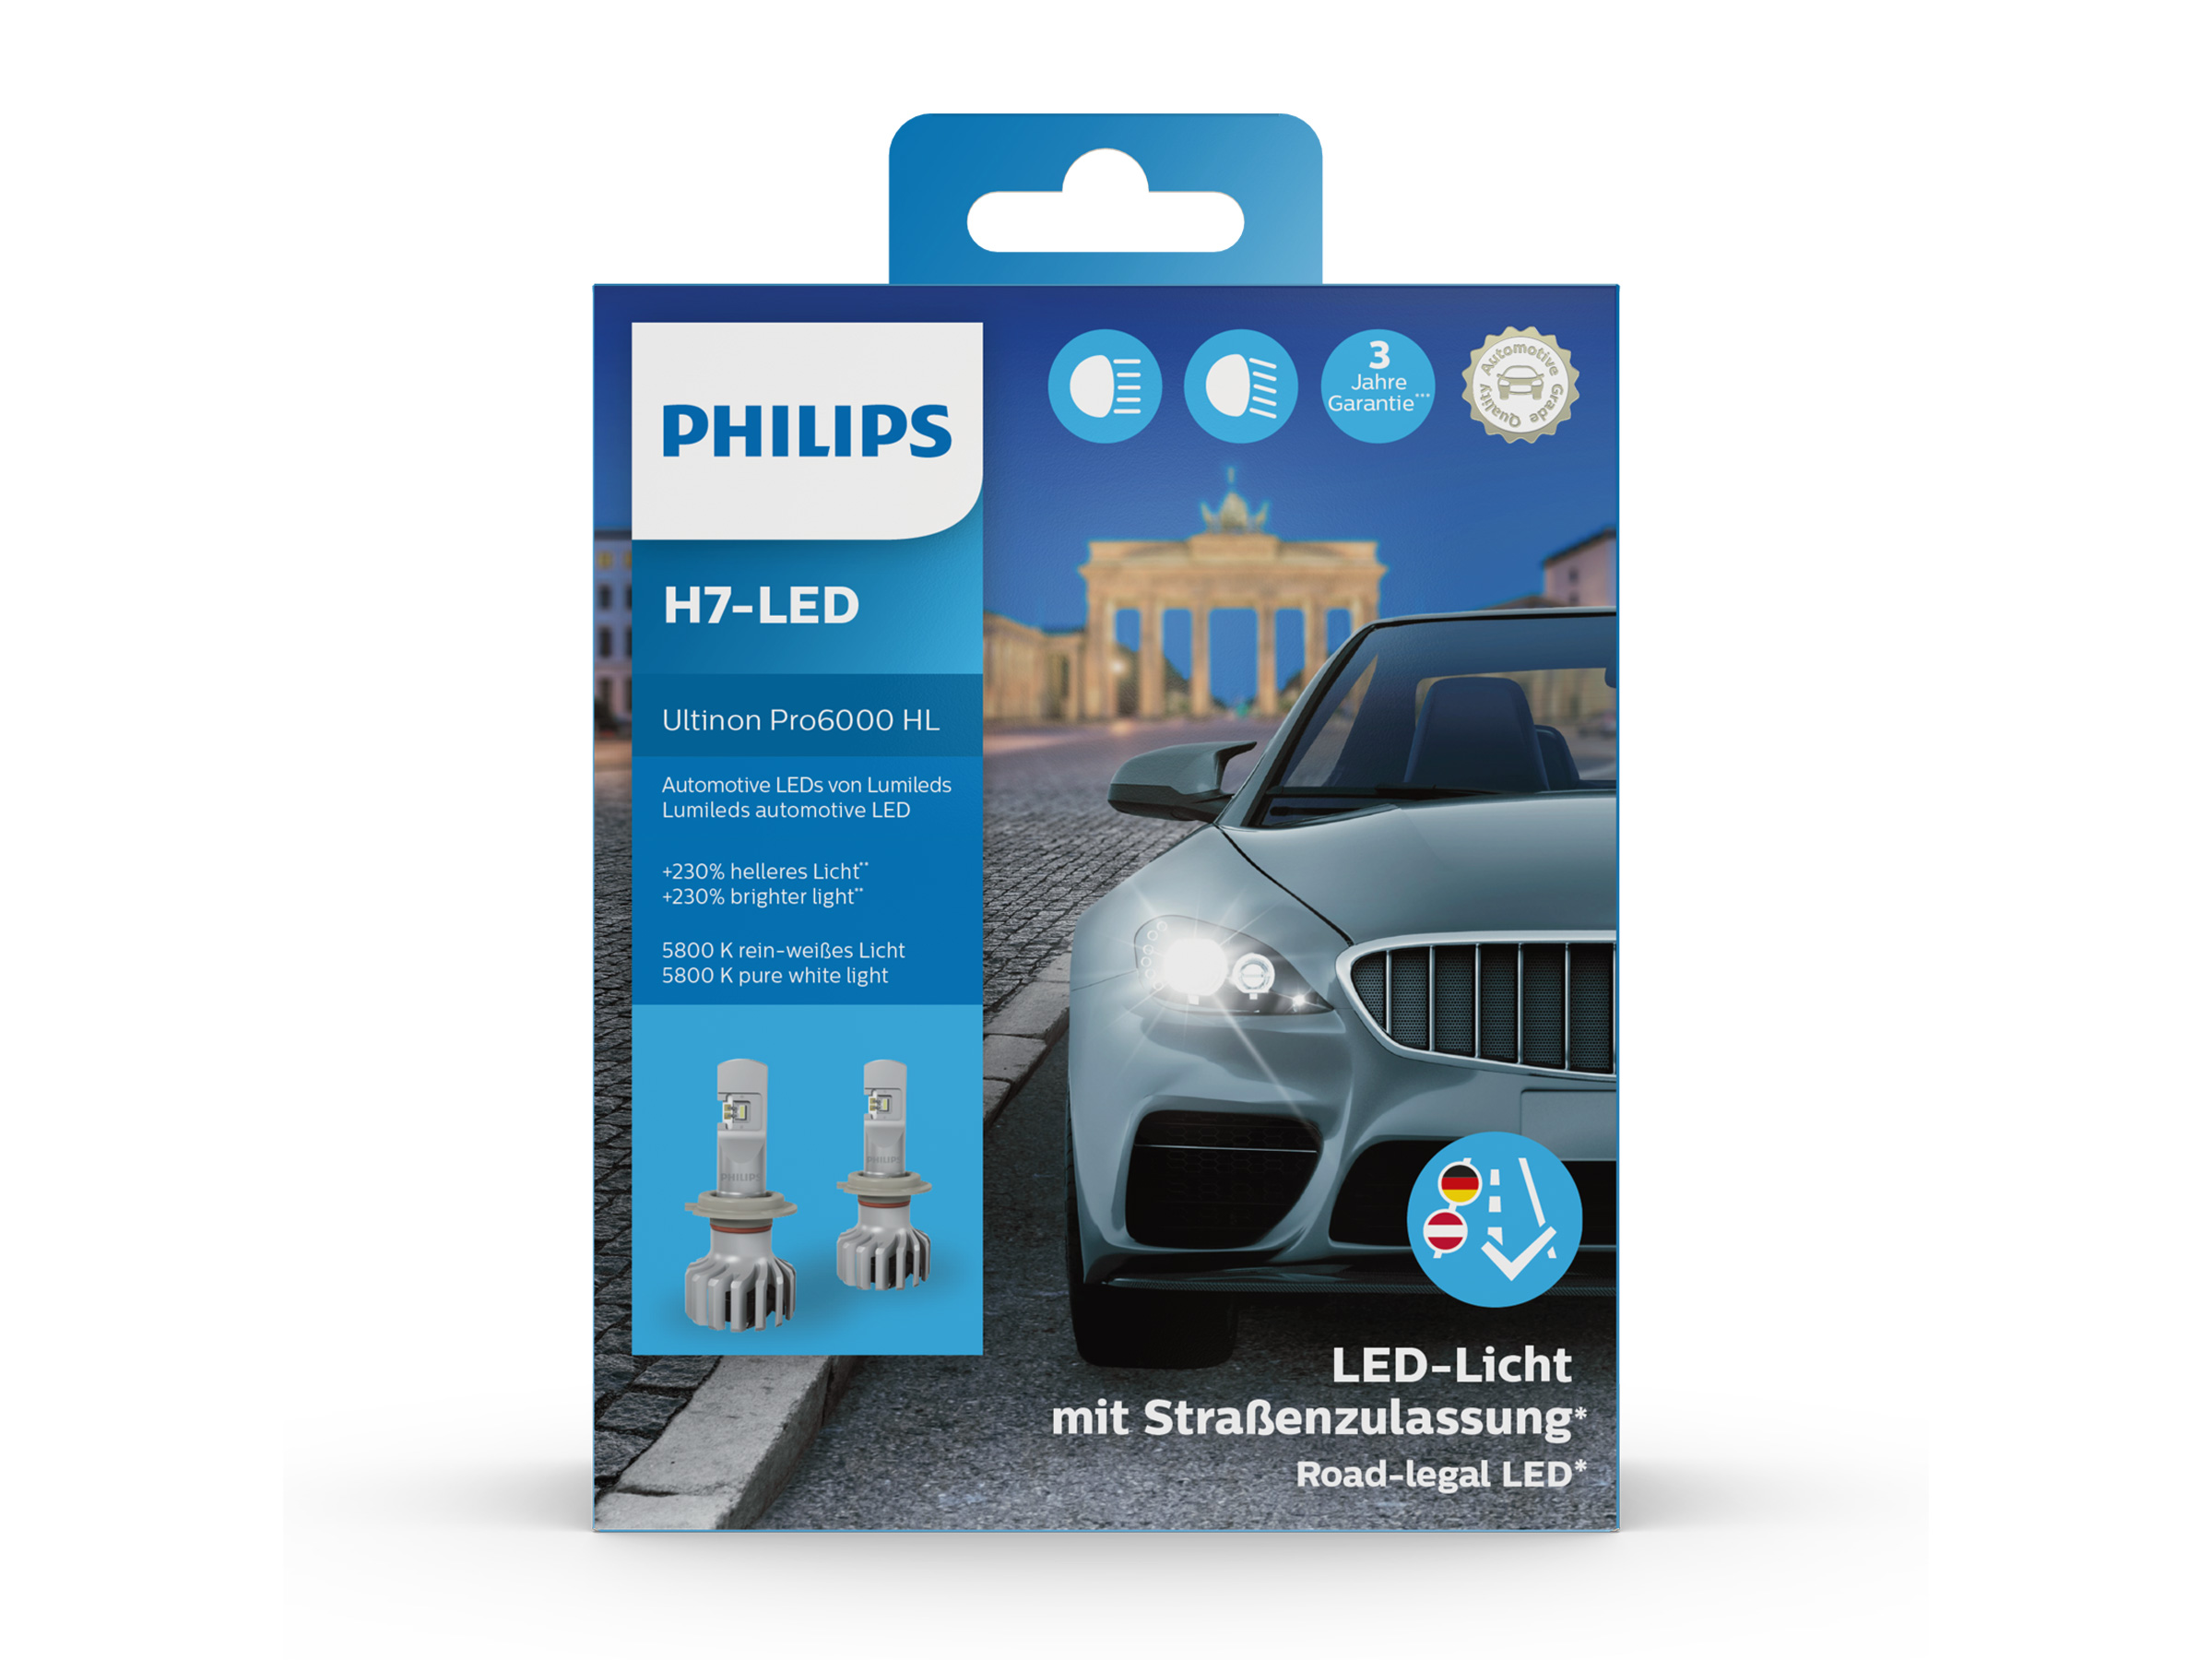 Philips Ultinon Pro6000 H7 LED für VW Passat B8 Typ 3C ab 2014 mit